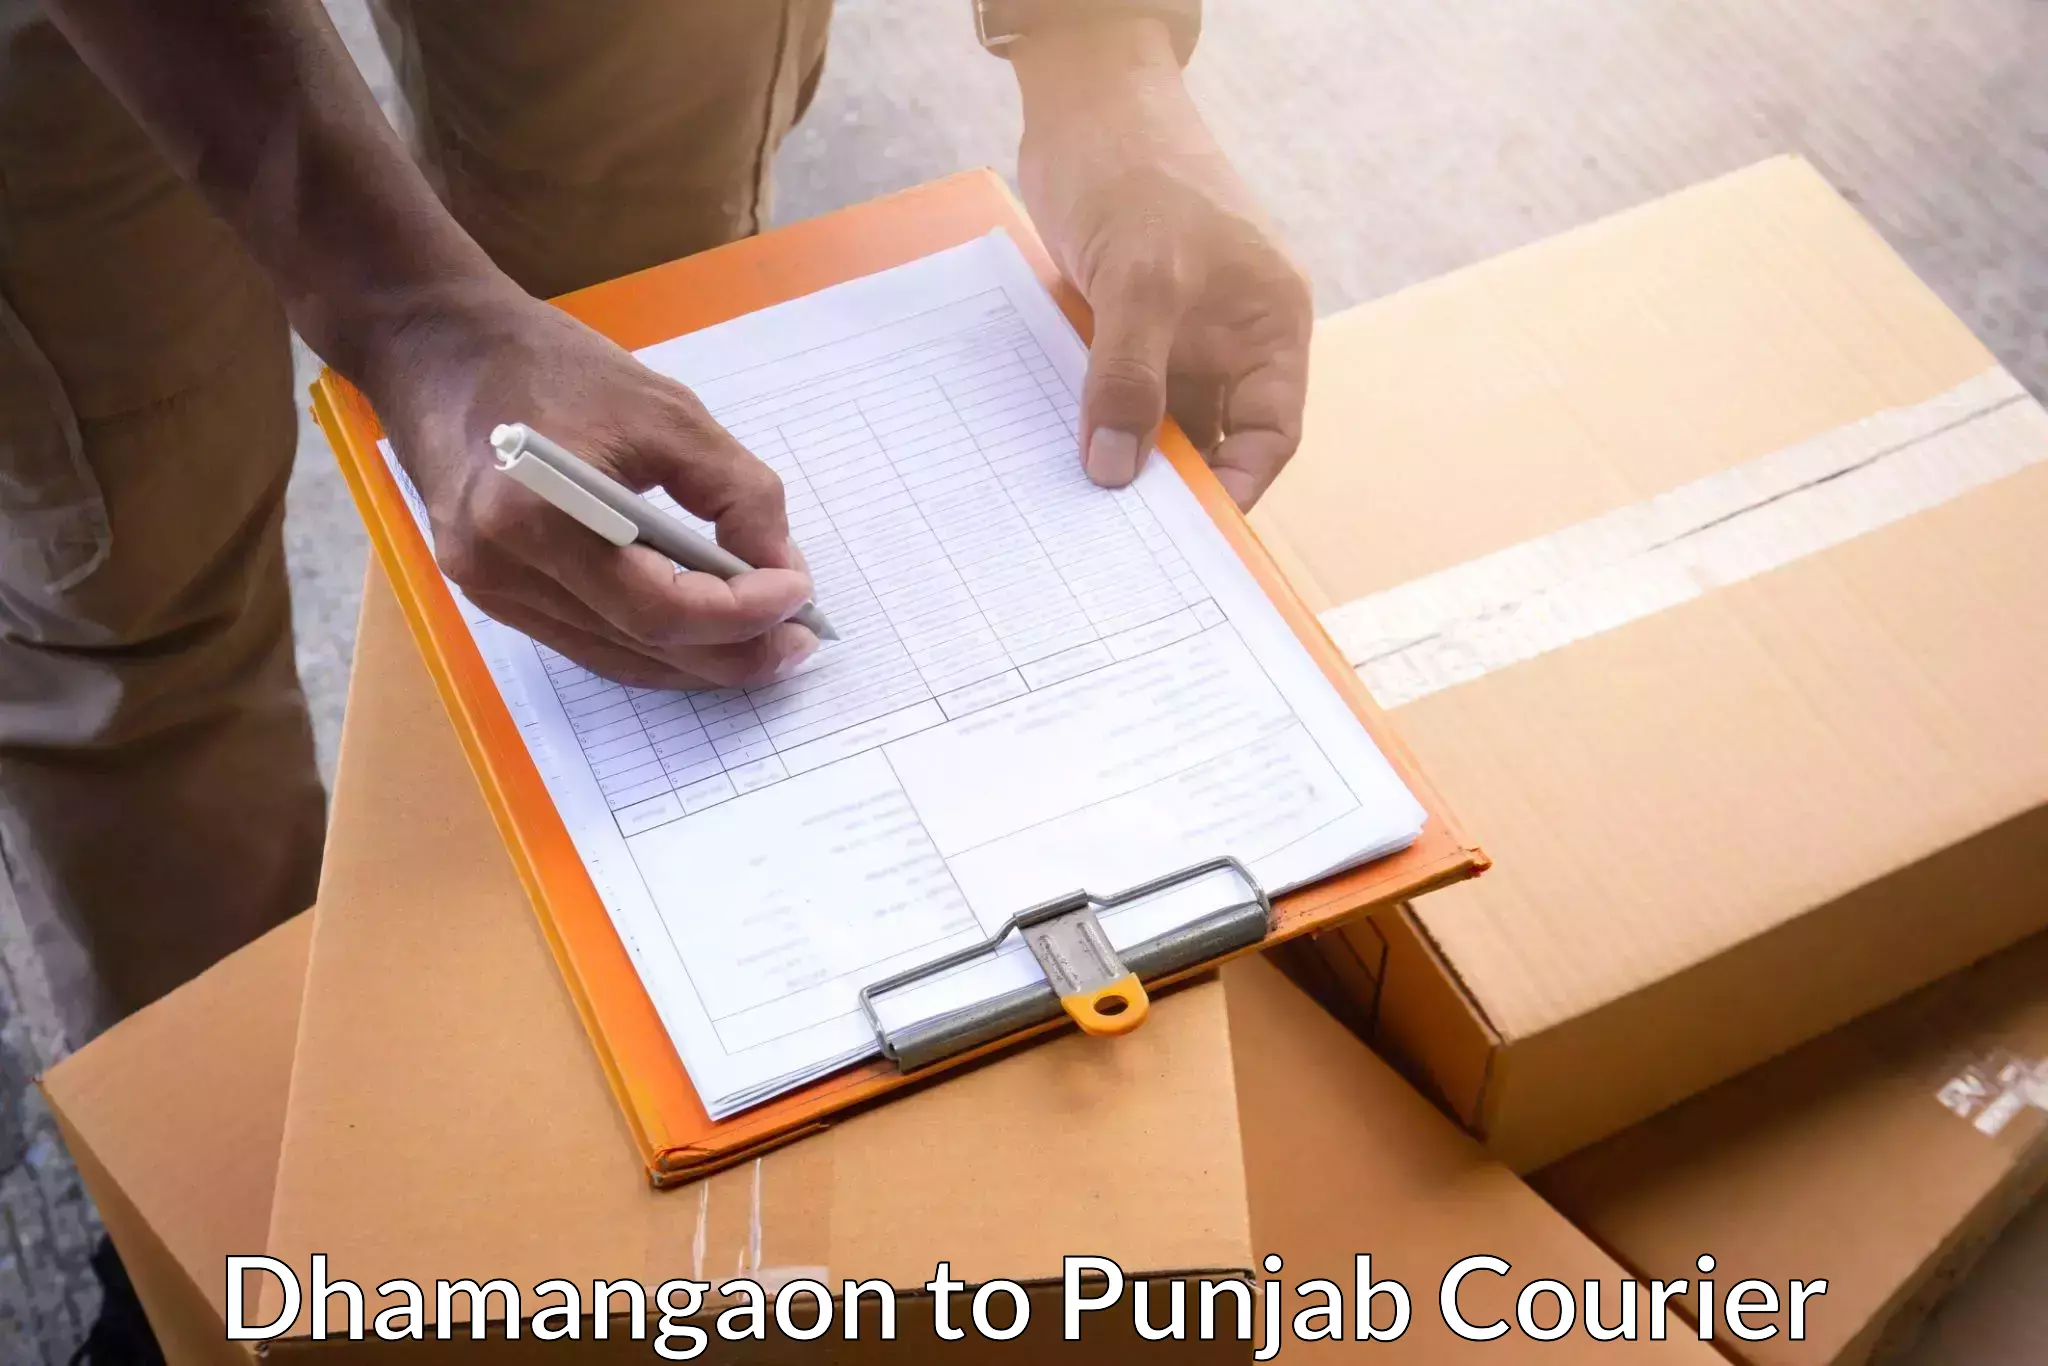 Efficient order fulfillment in Dhamangaon to Muktsar